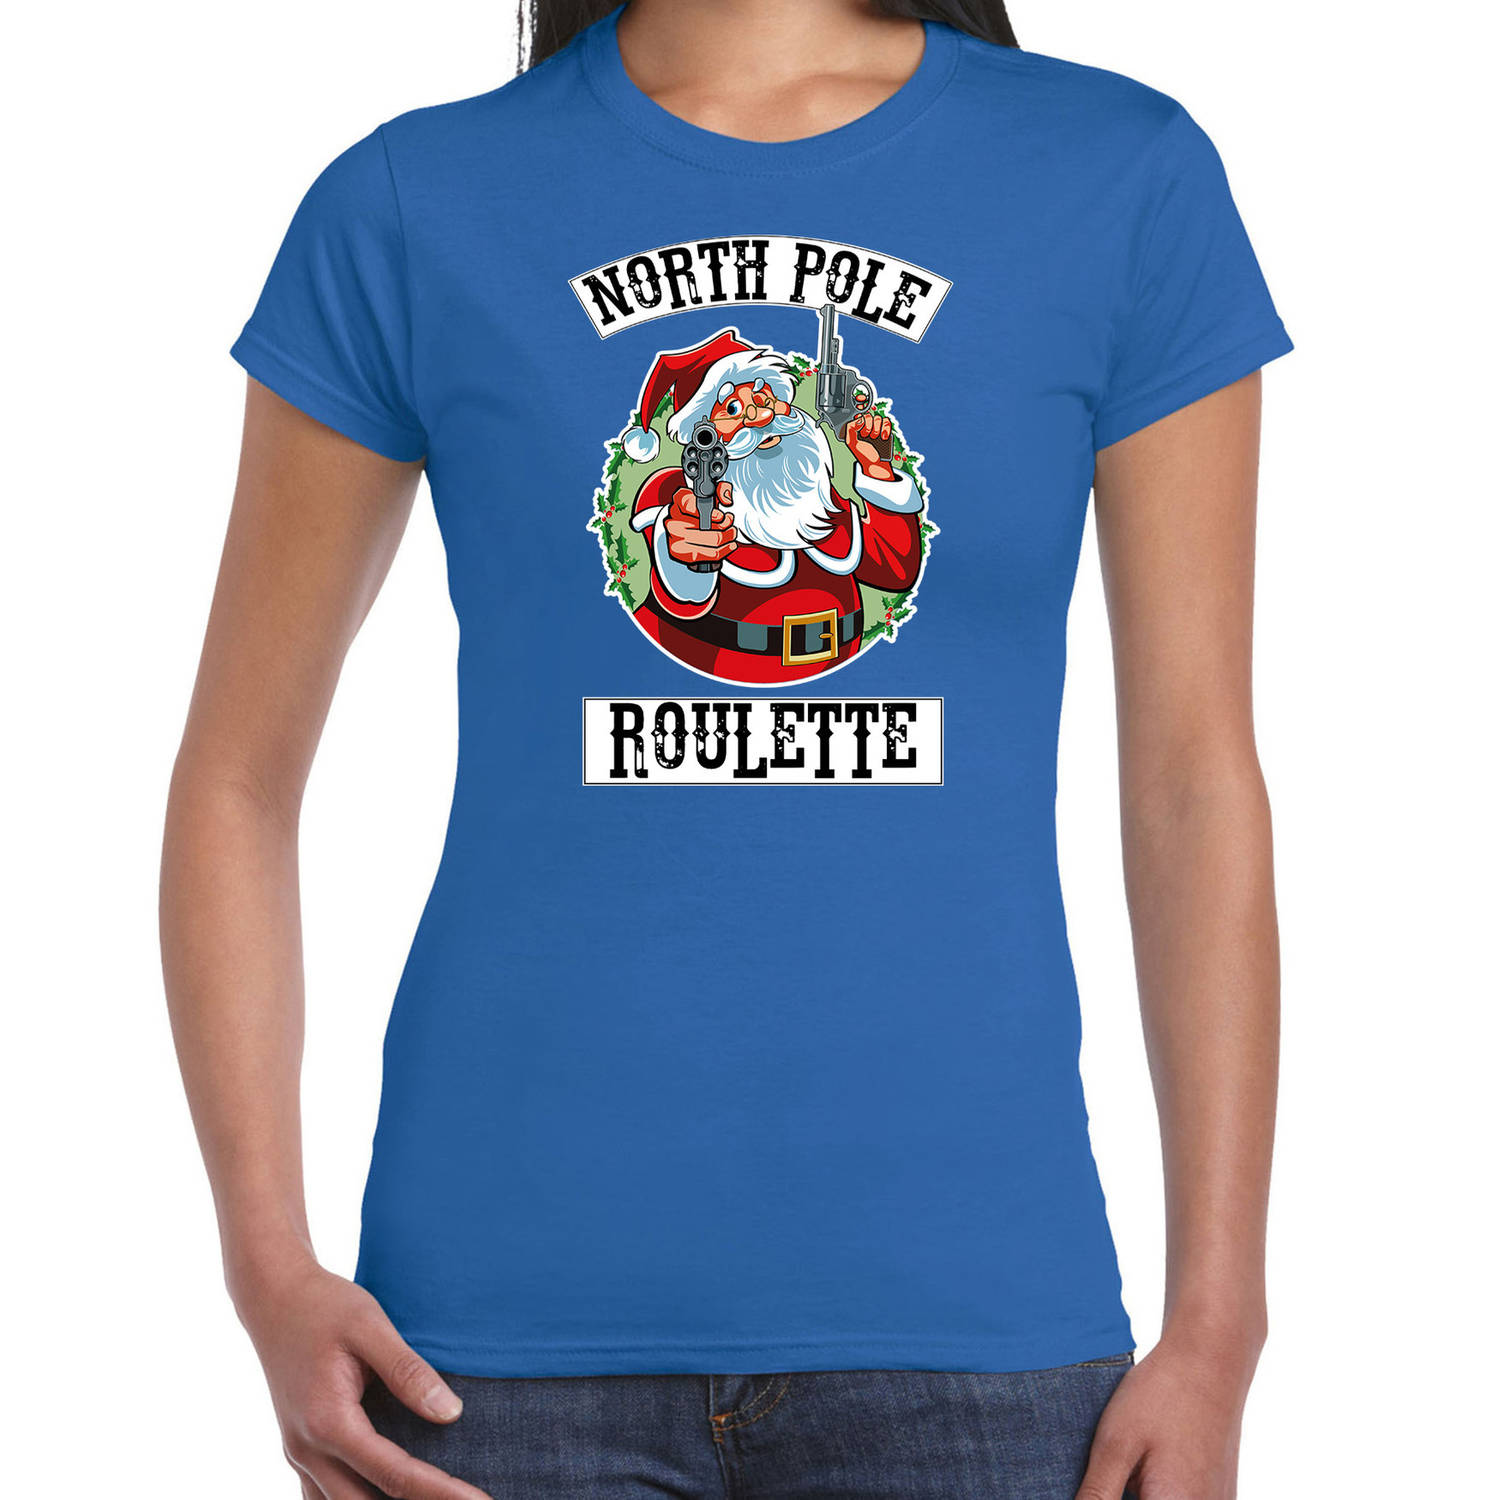 Blauw Kerstshirt / Kerstkleding Northpole roulette voor dames XS - kerst t-shirts